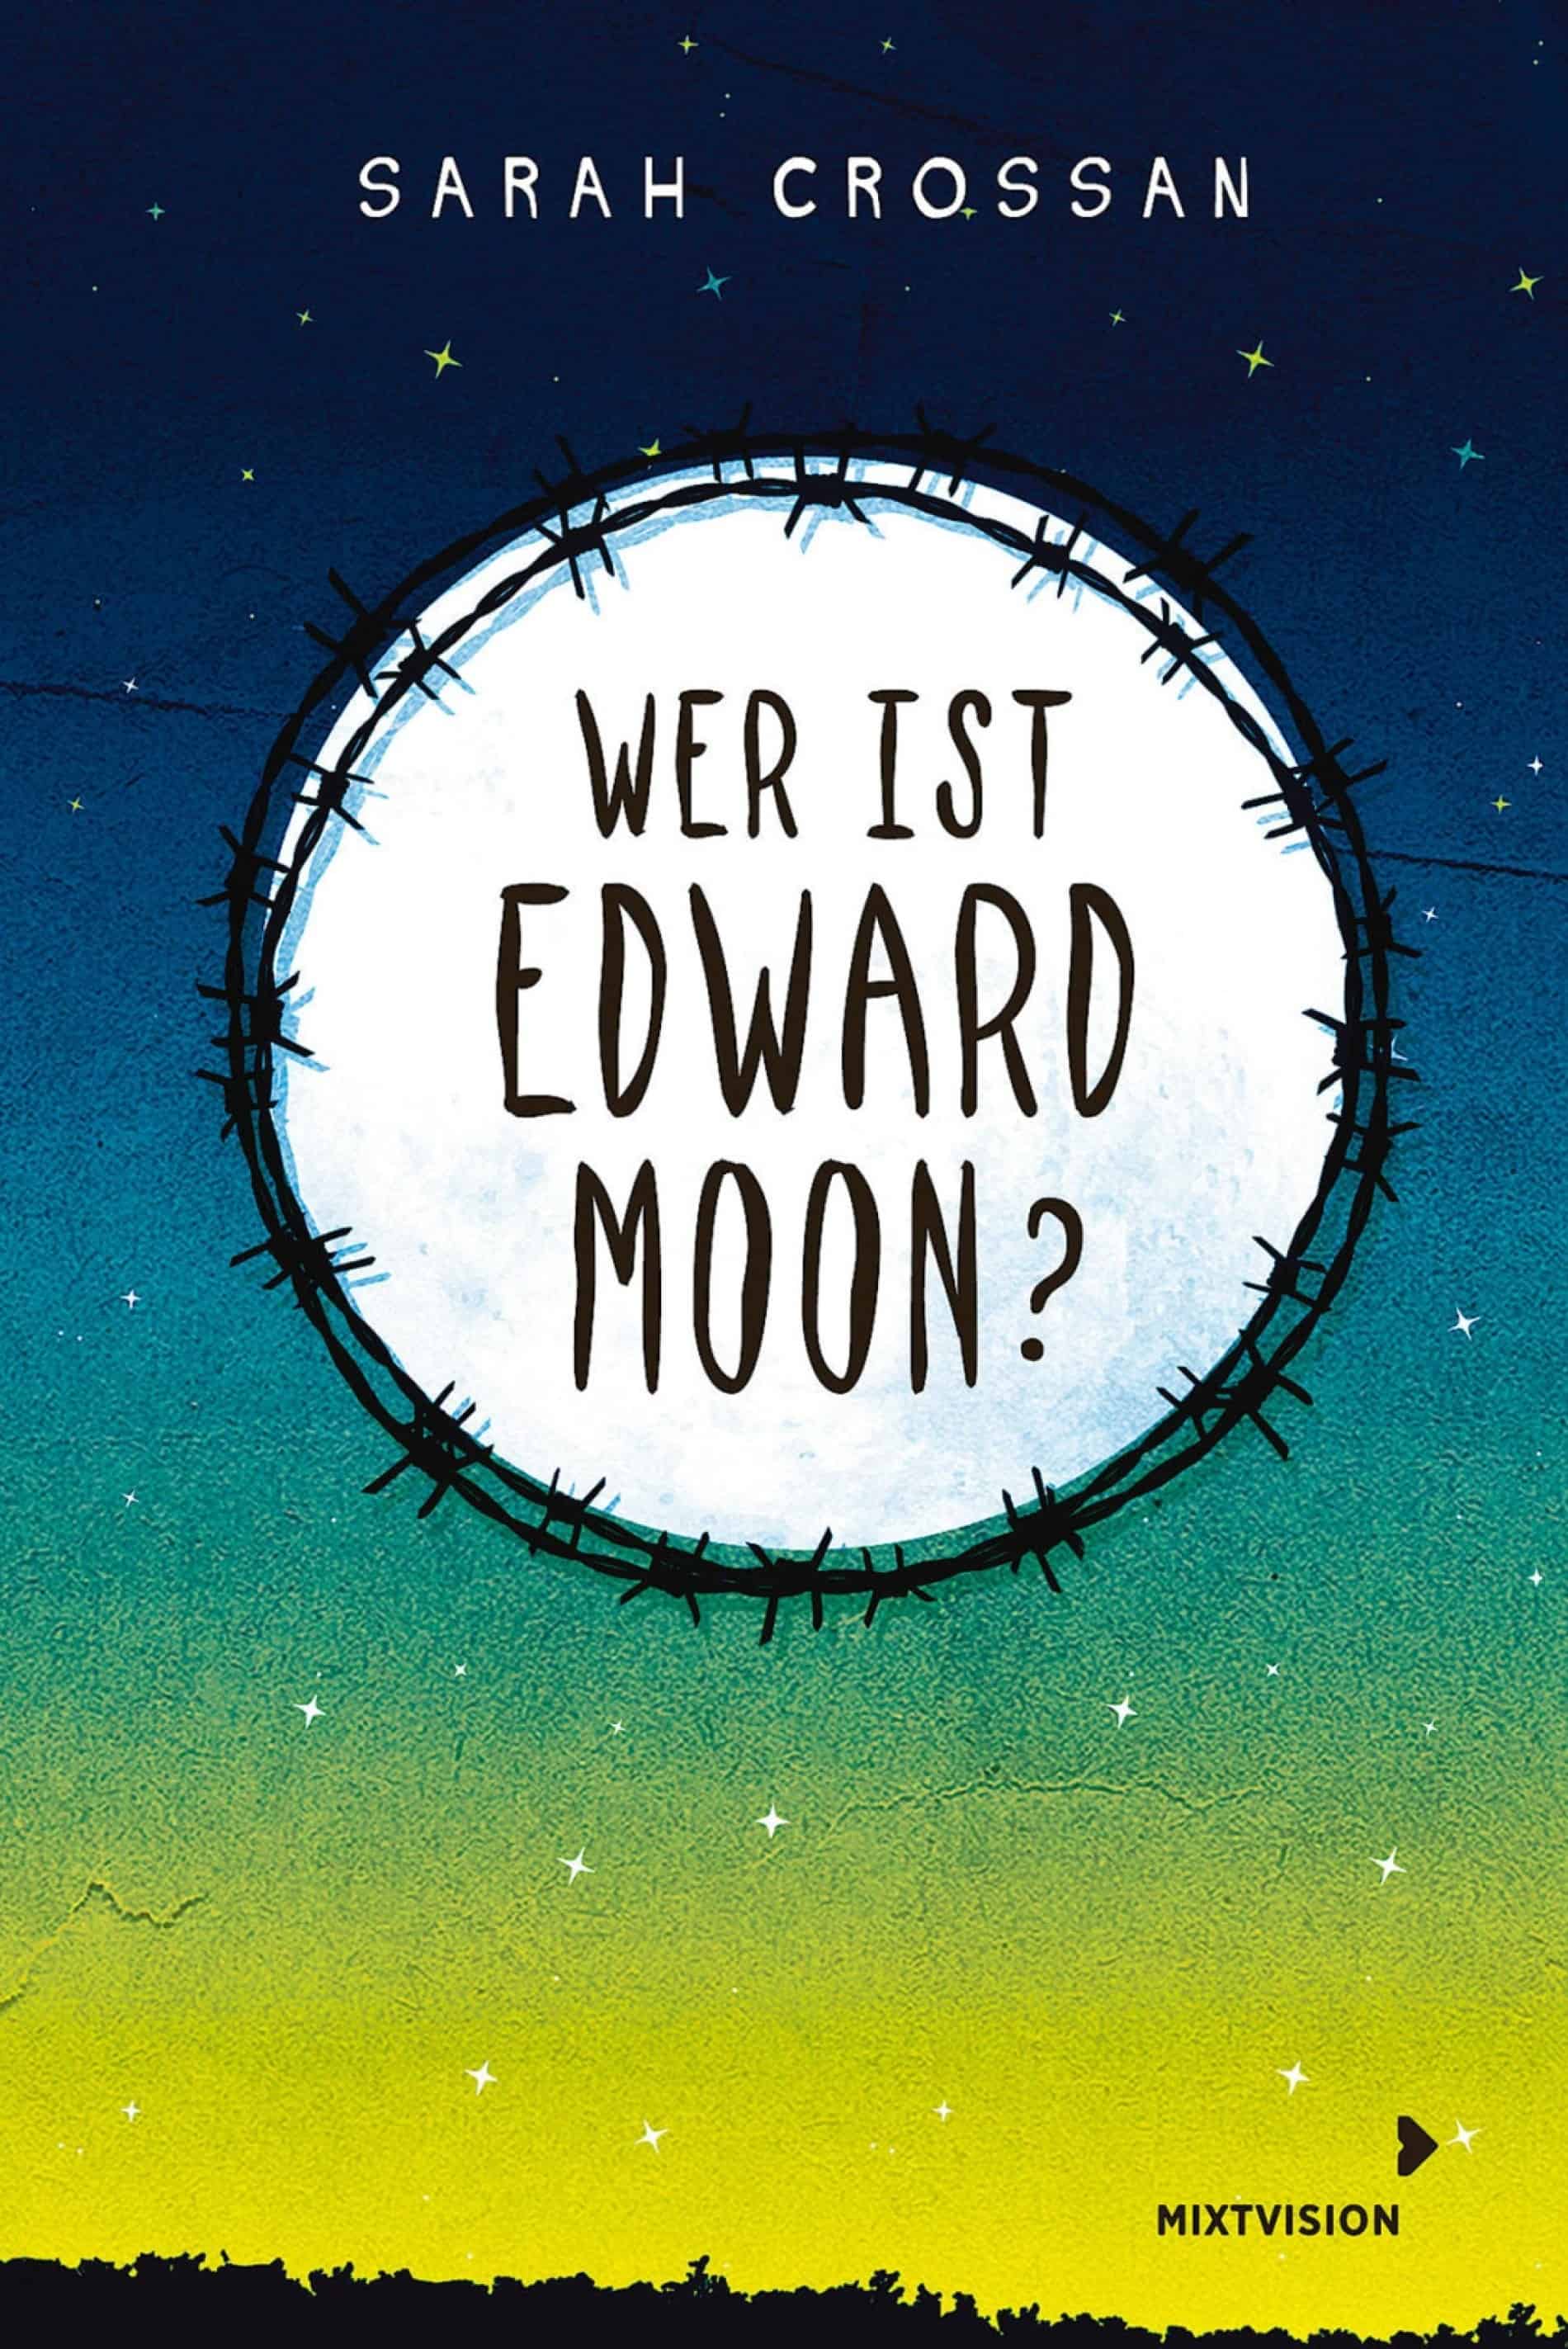 Crossan, Sarah: Wer ist Edward Moon?